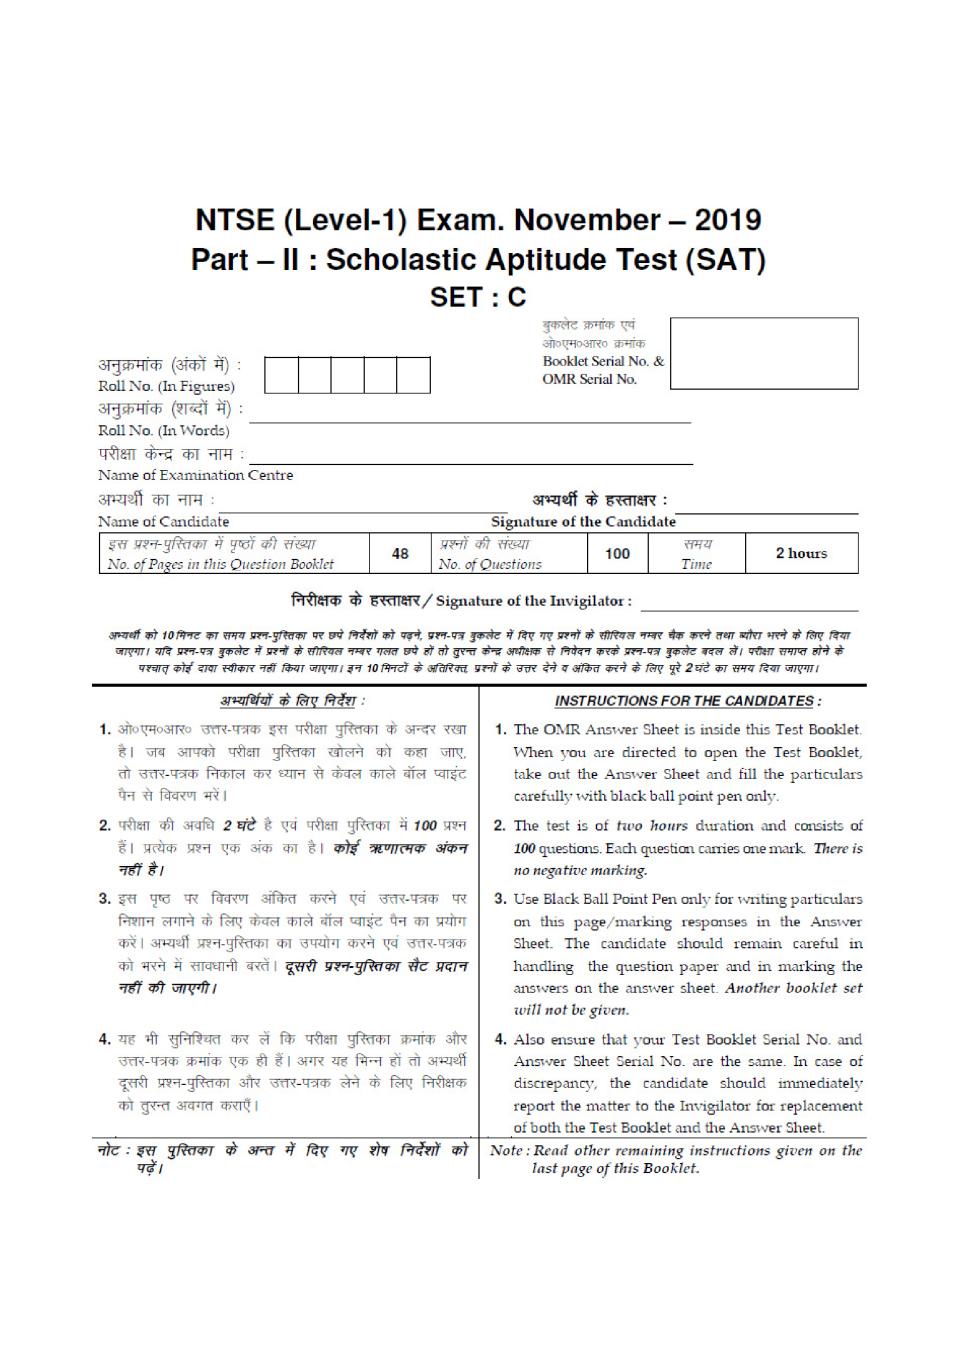 NTSE Sample Questions : Stage-II Scholastic Aptitude Test (SAT)